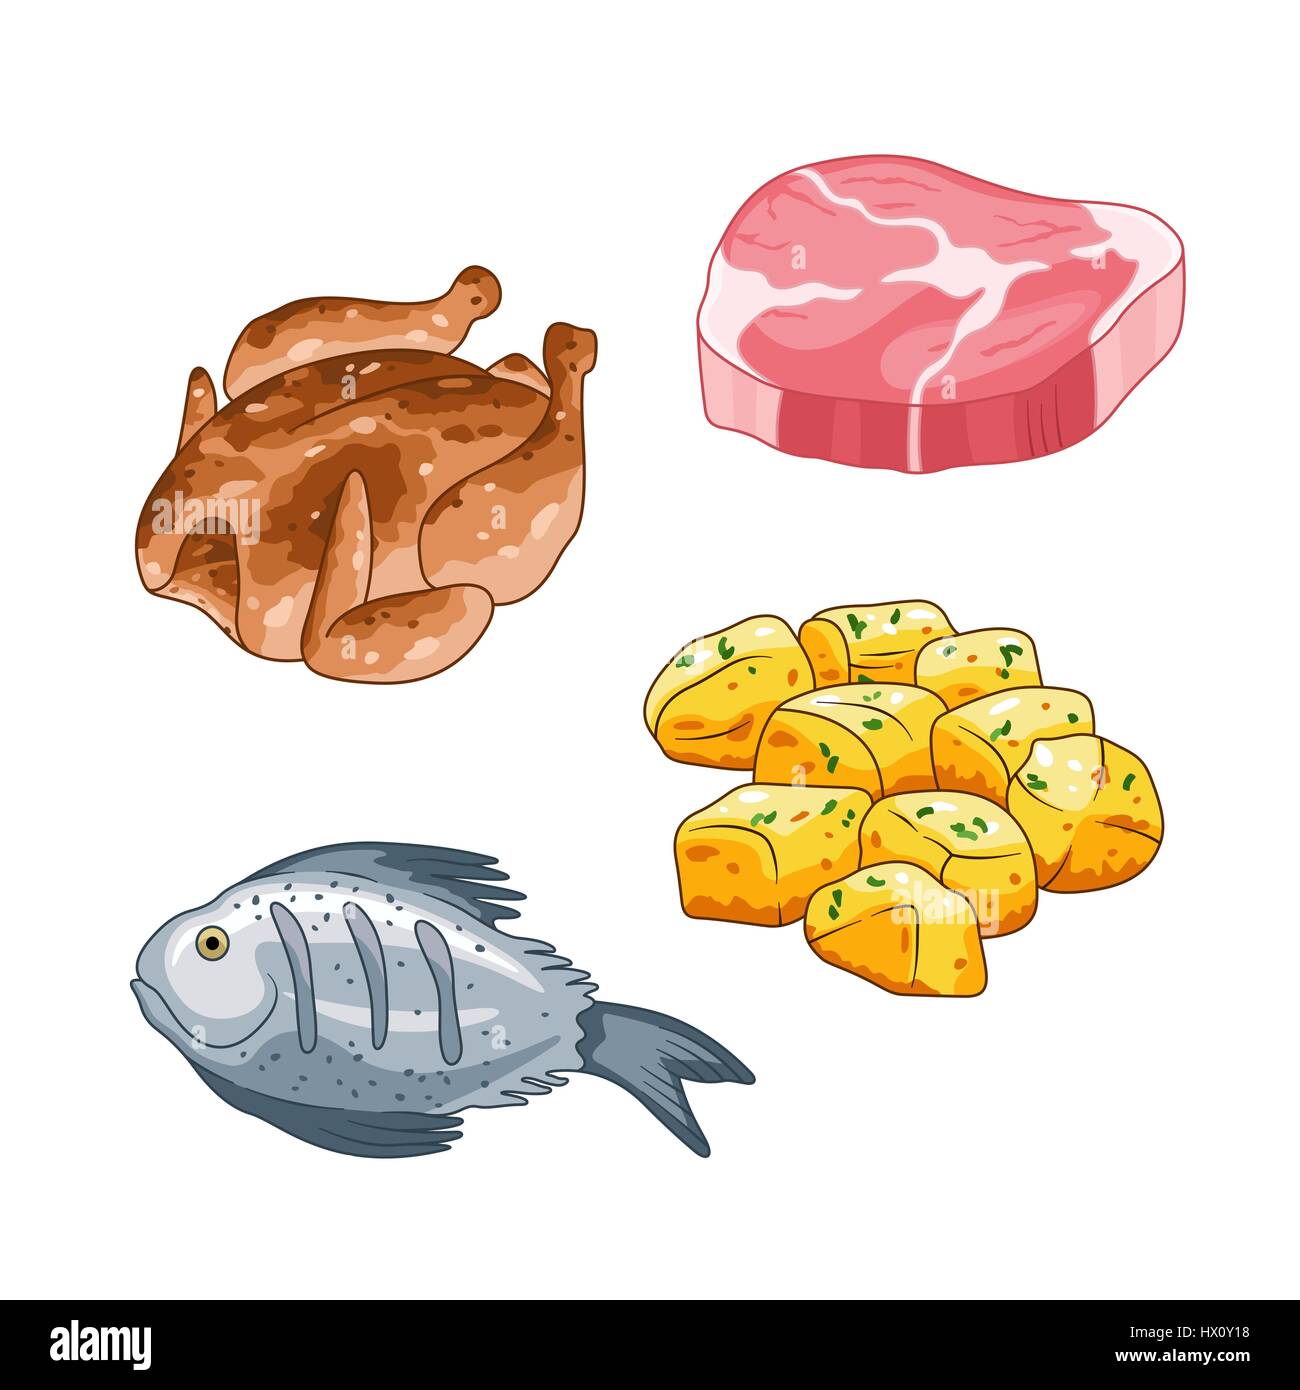 Lebensmittel und Essen Vektor festgelegt im Cartoon-Stil Stock Vektor